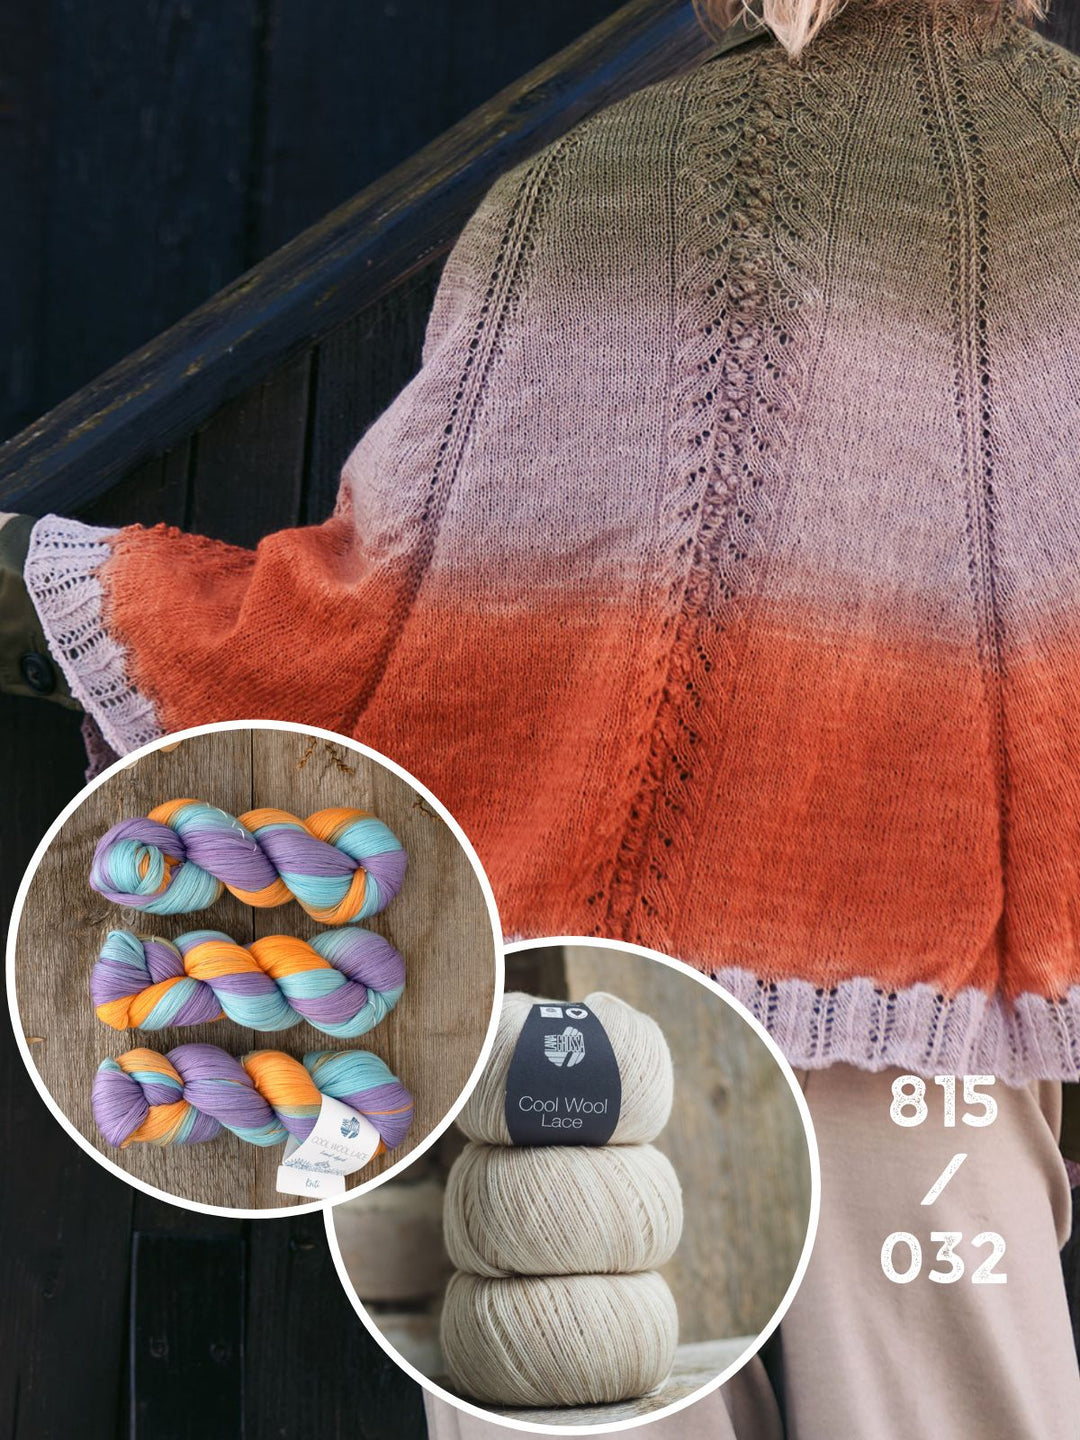 Breipakket Cool Wool Lace Hand-dyed stola